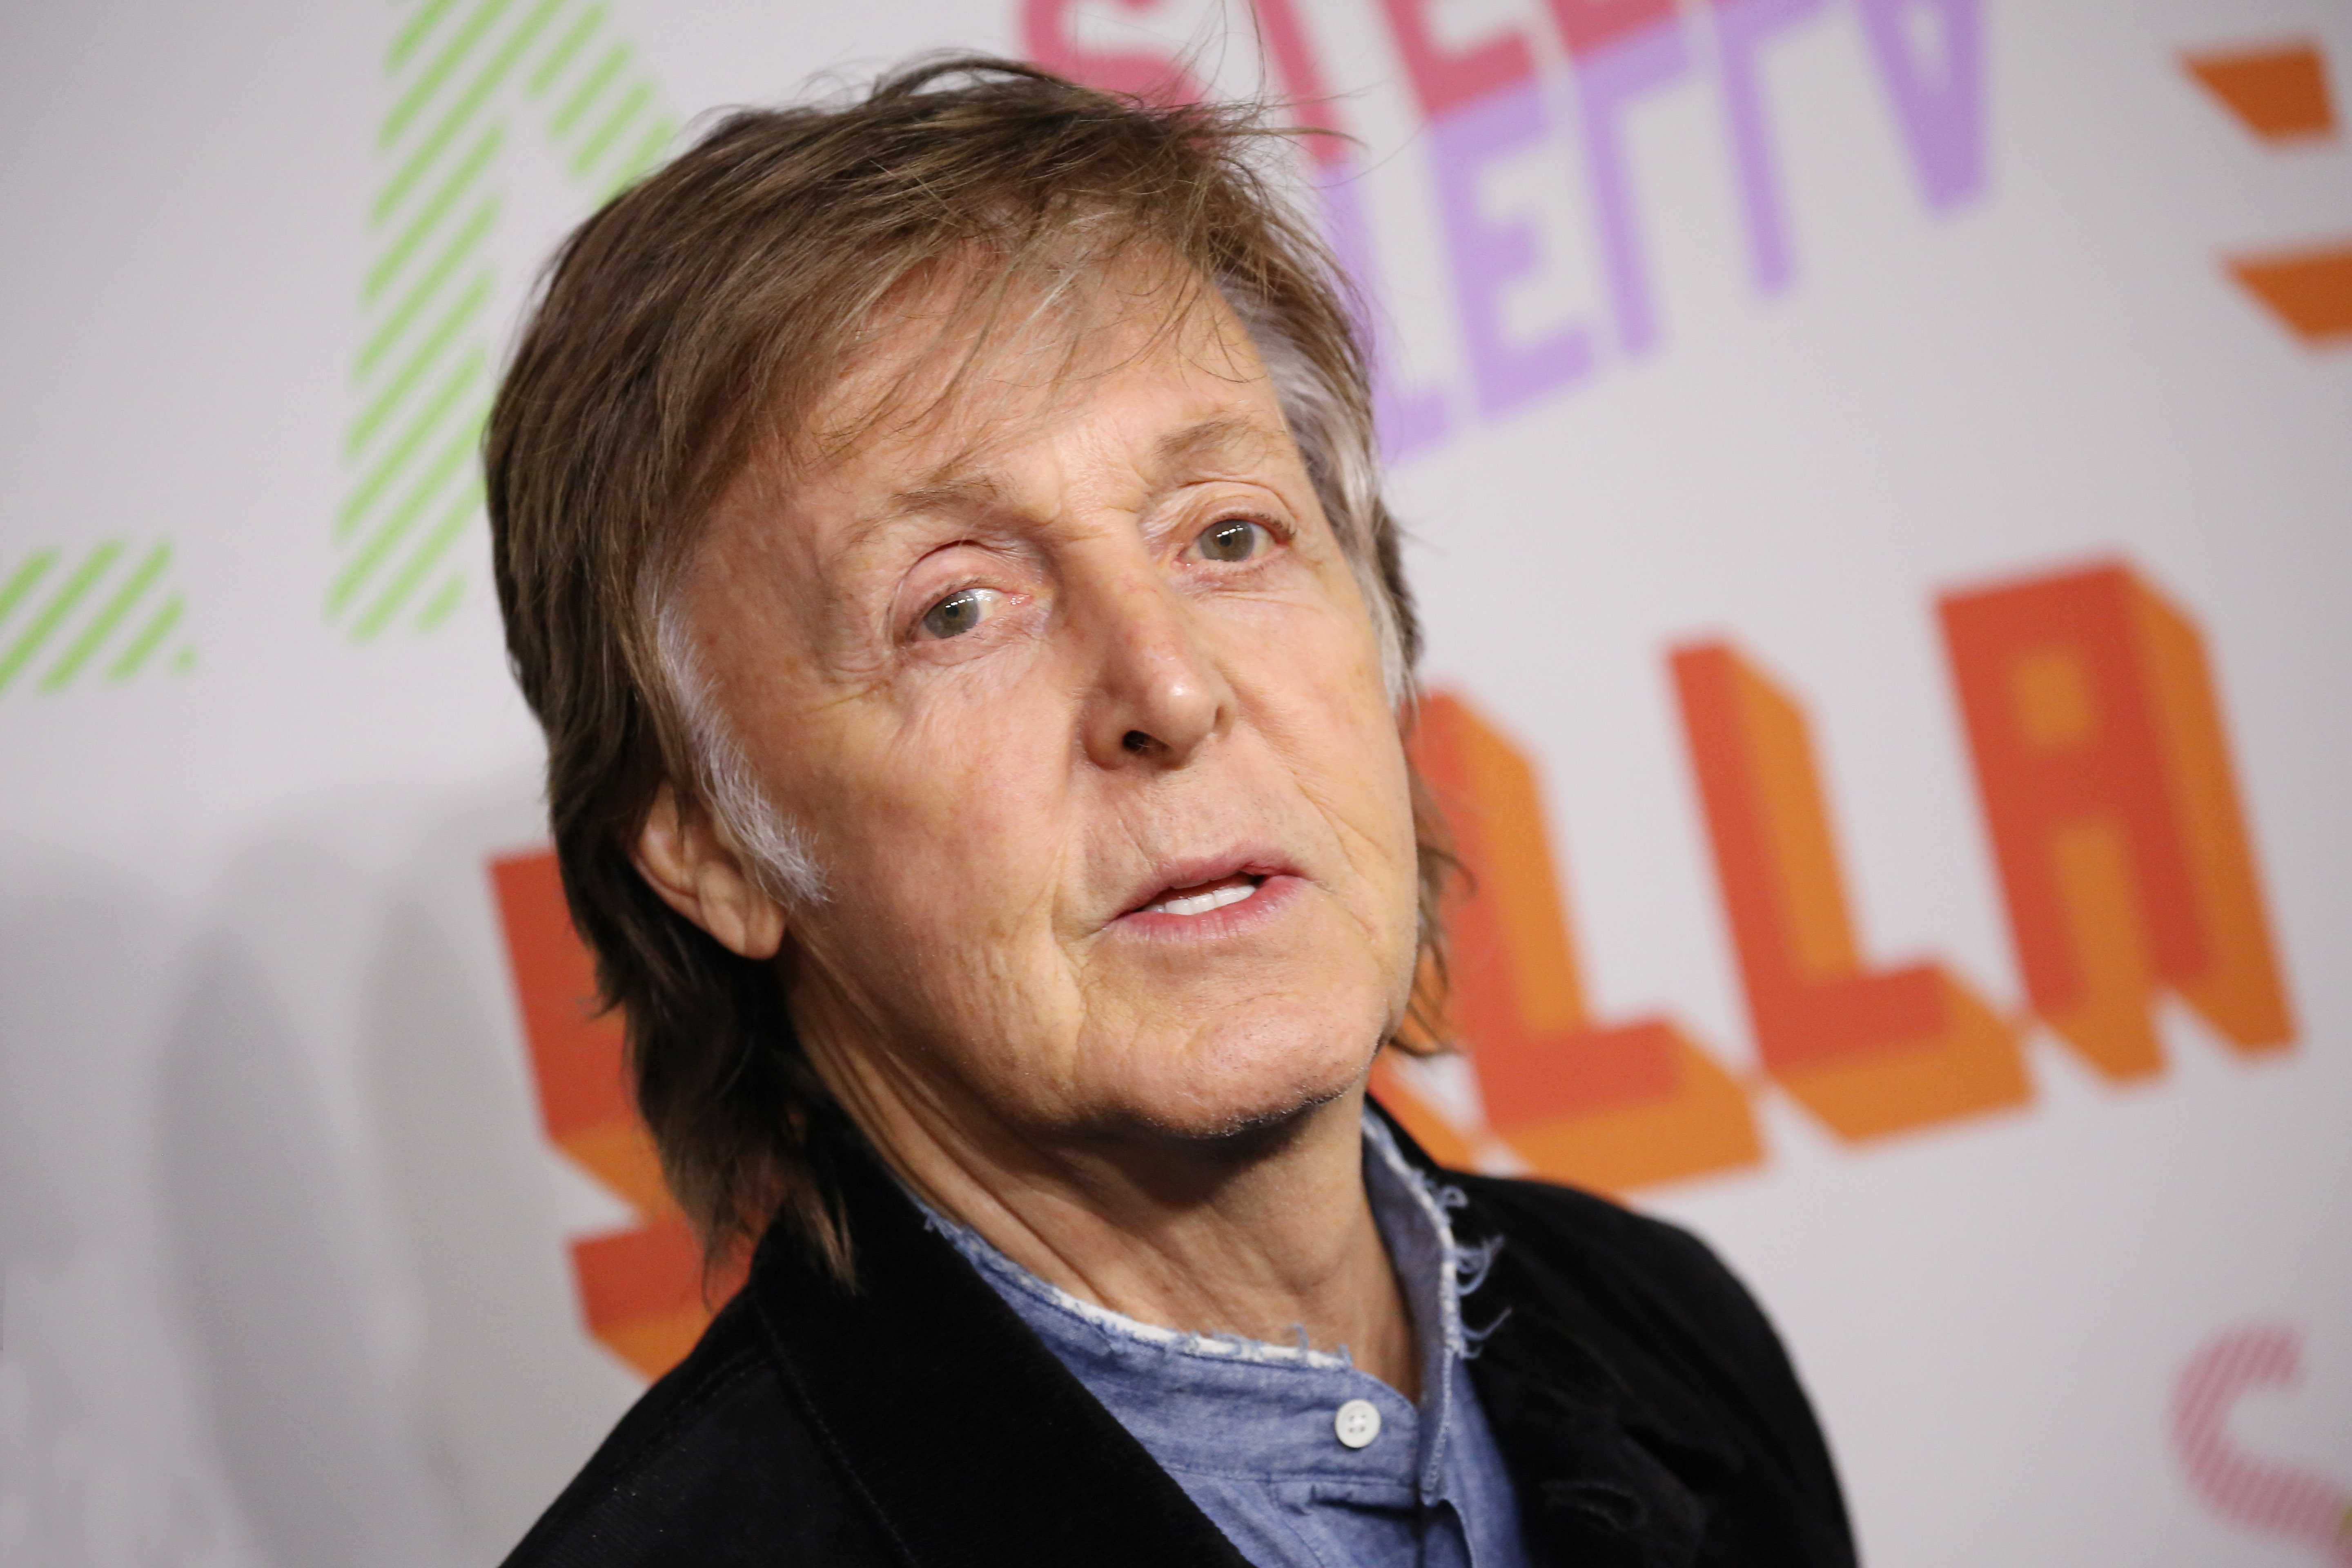 Paul McCartney Announces Two New Singles and Album